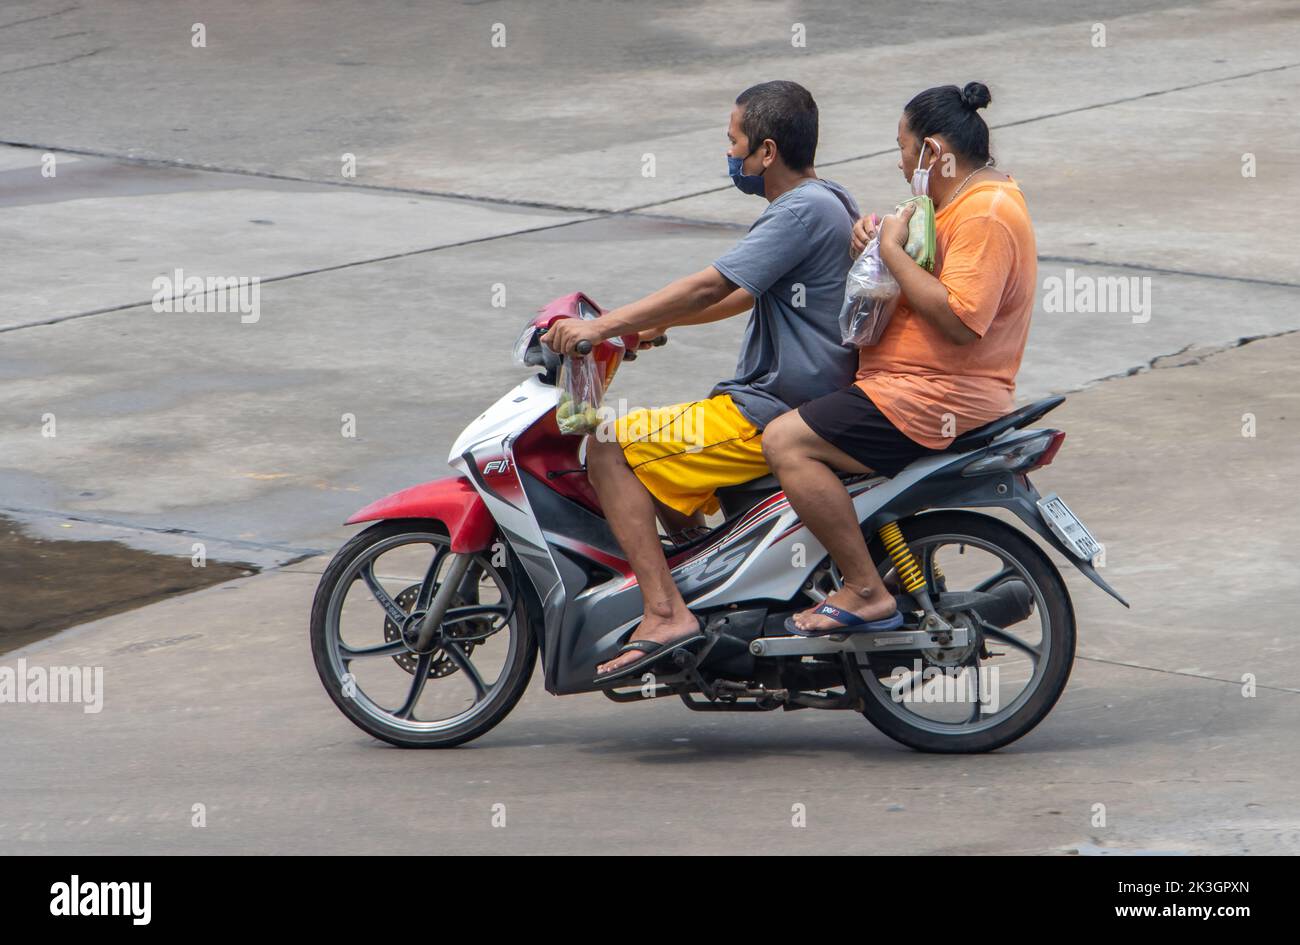 SAMUT PRAKAN, THAILAND, SEP 23 2022,  The pair rides on motorcycle at the street. Stock Photo